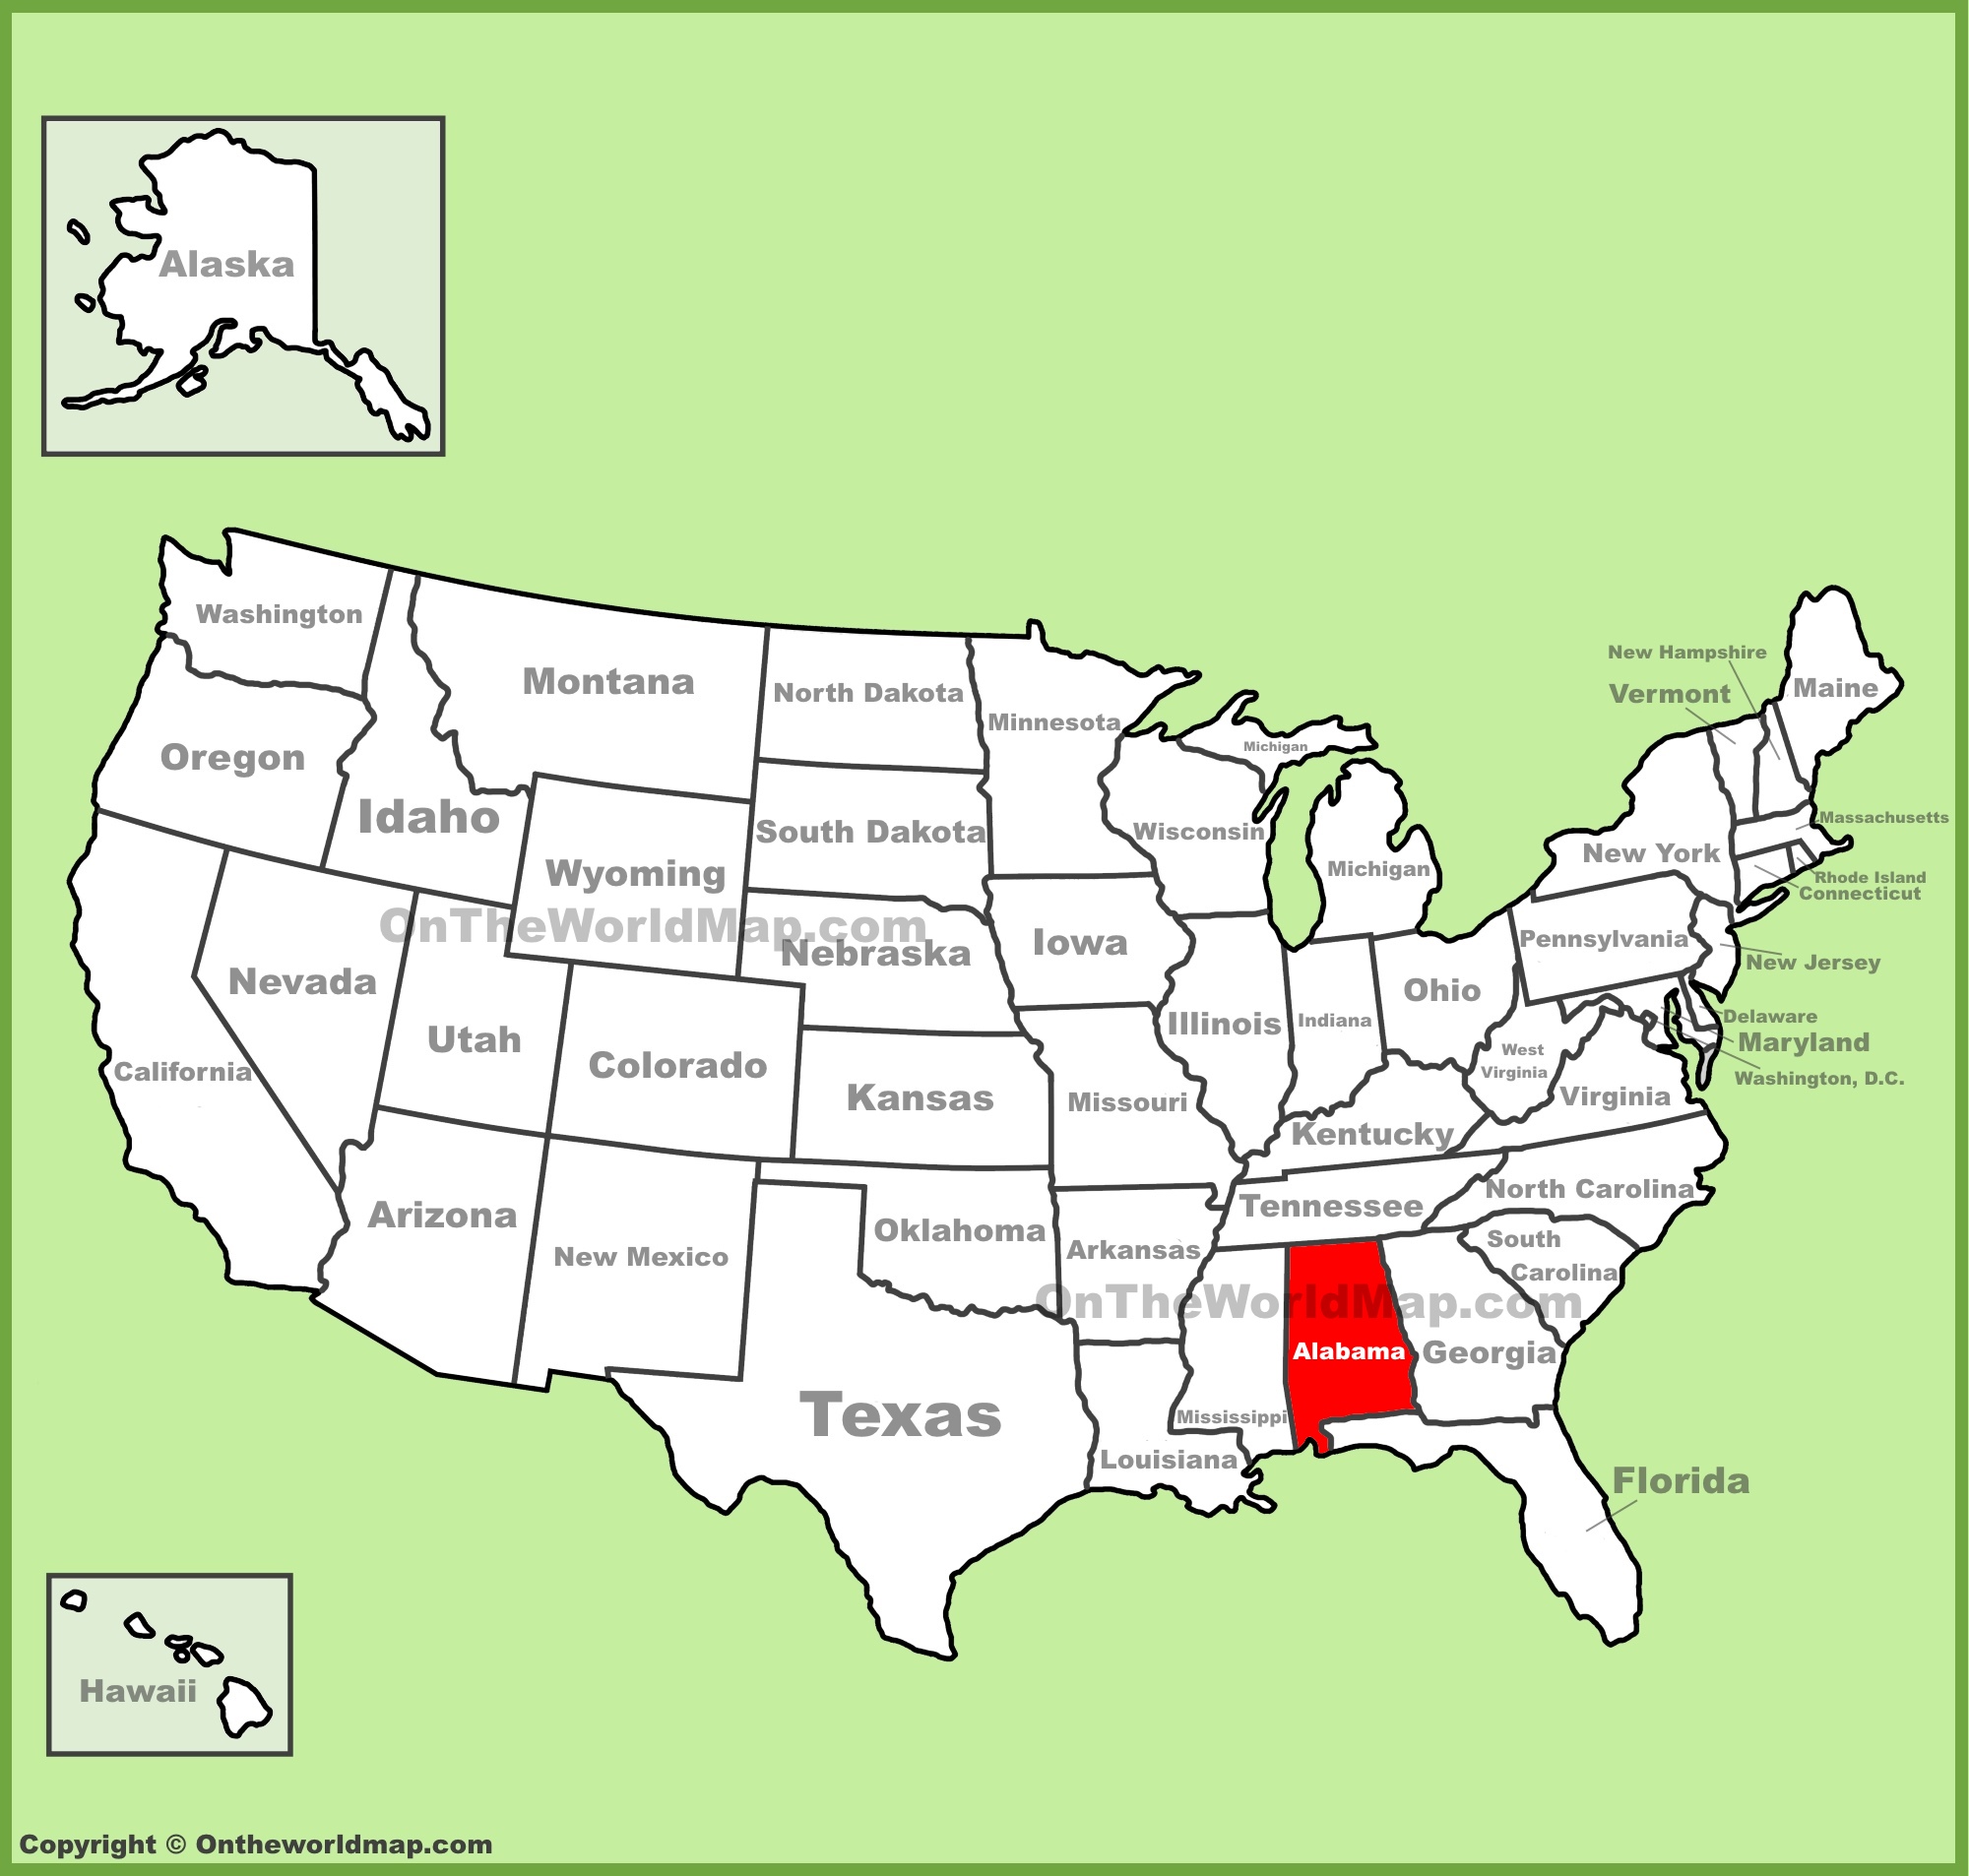 Alabama Location On The U S Map